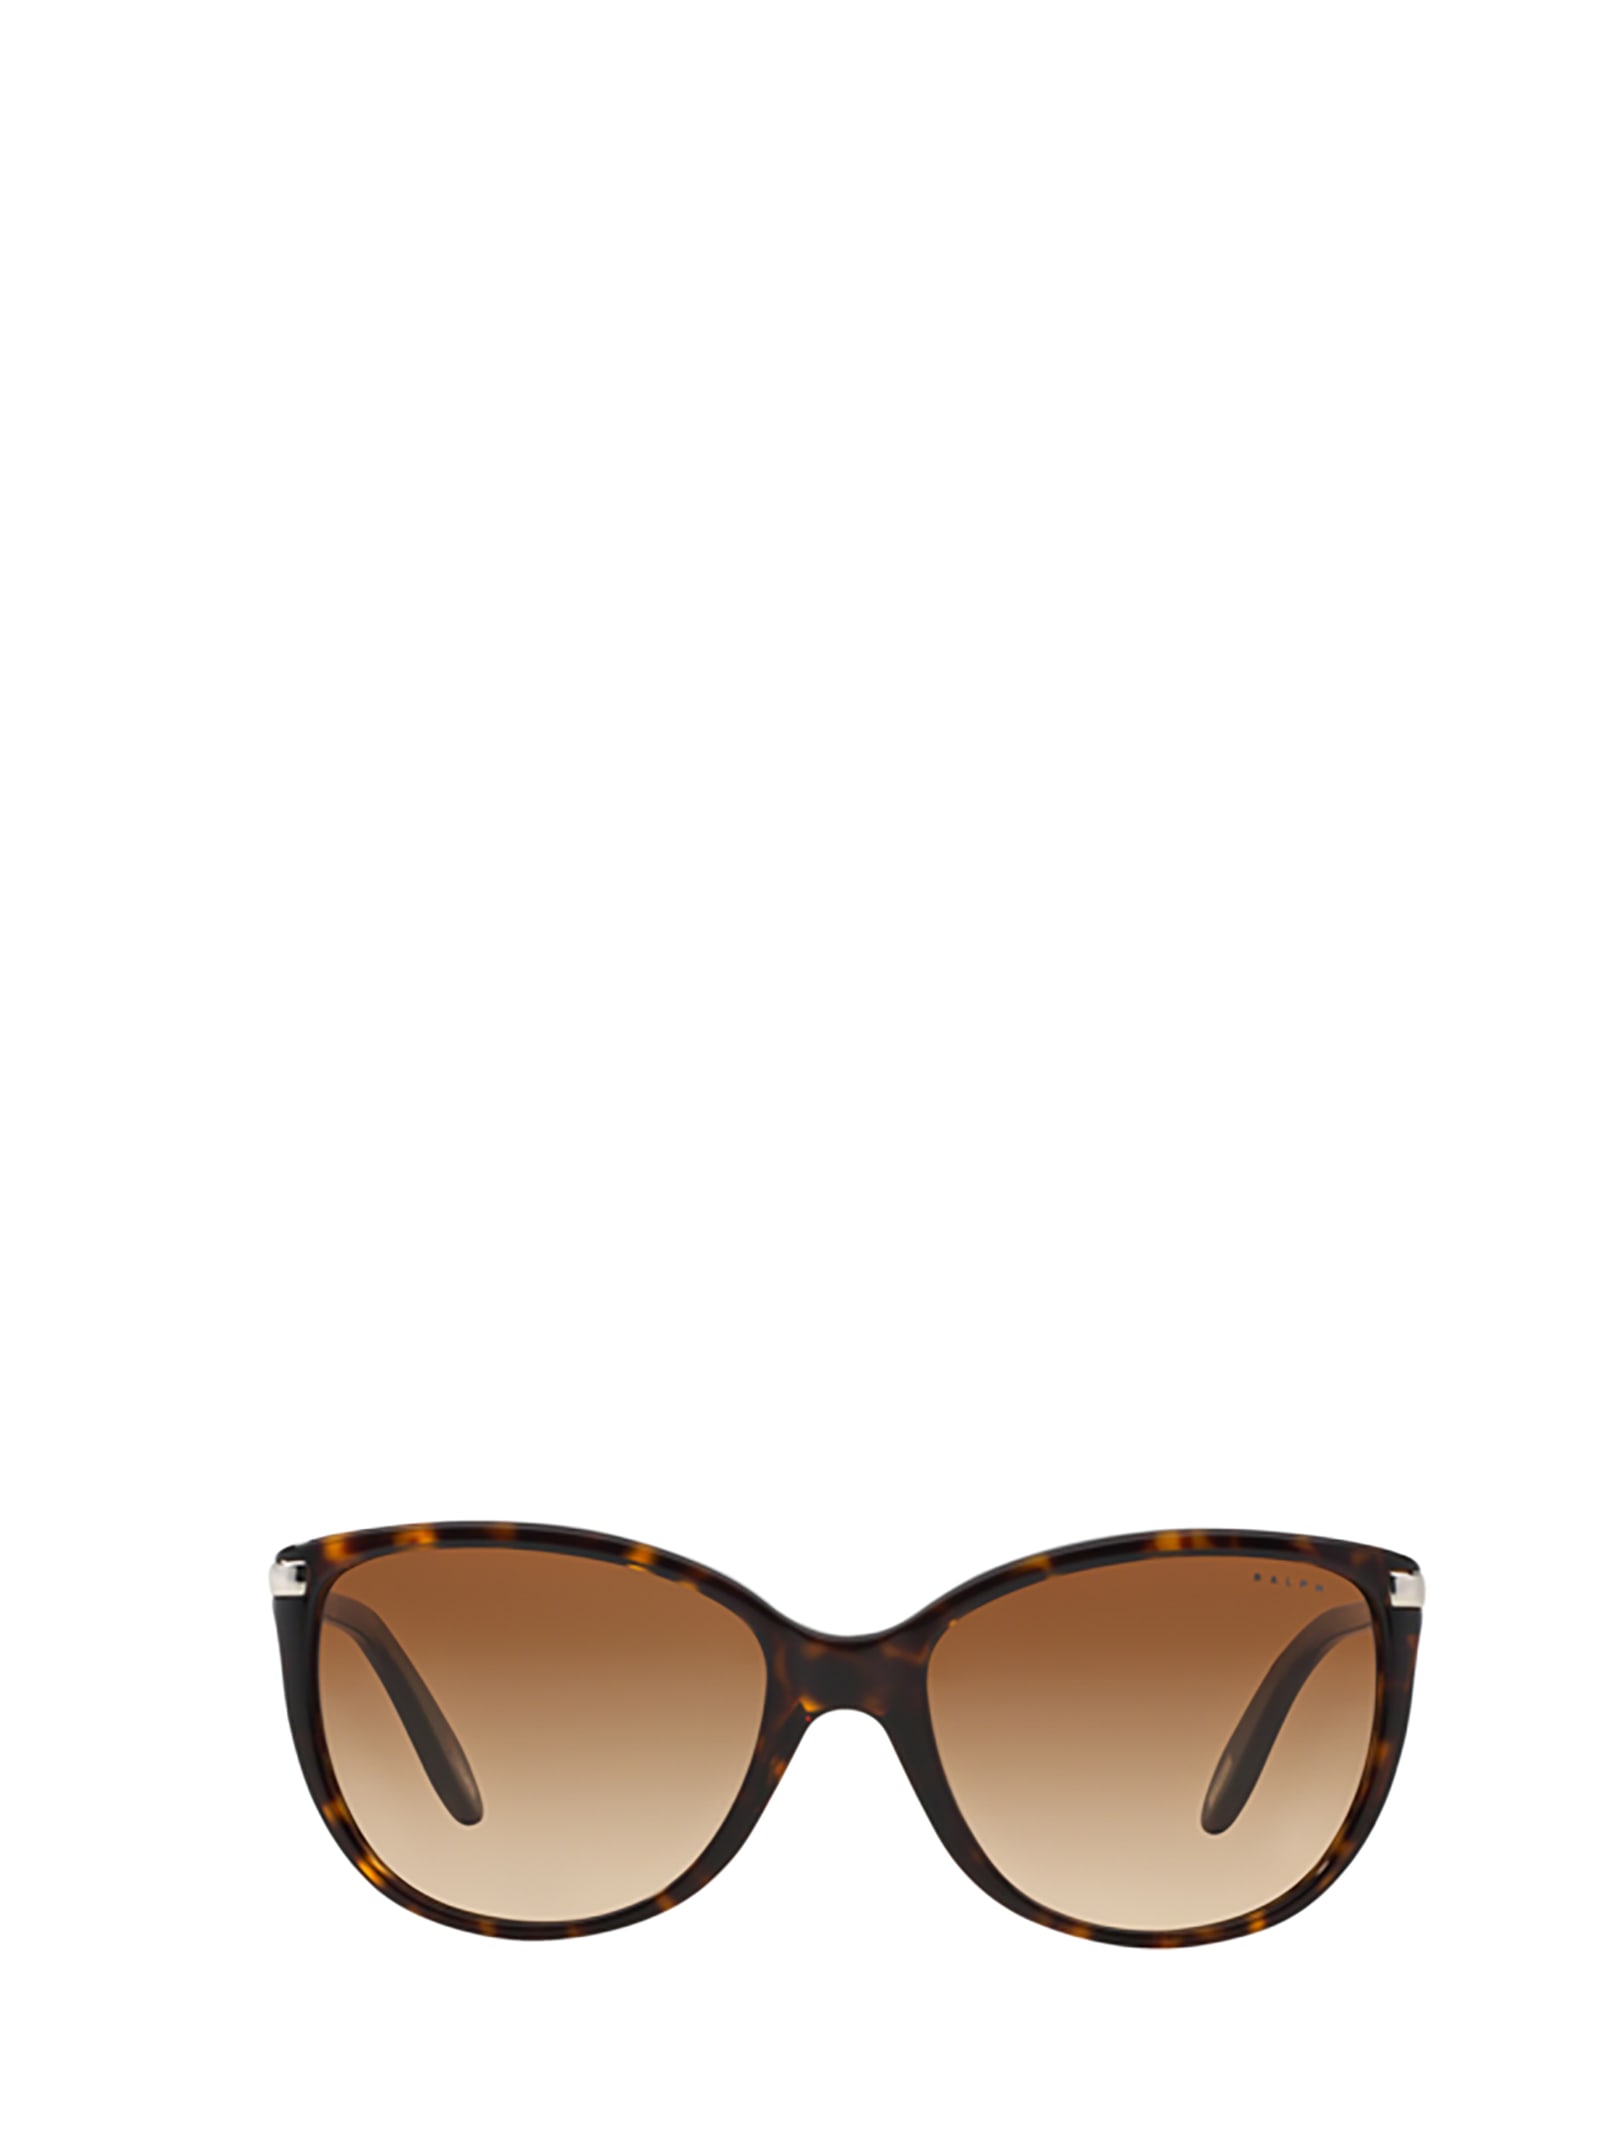 Shop Polo Ralph Lauren Ra5160 Shiny Dark Tortoise Sunglasses